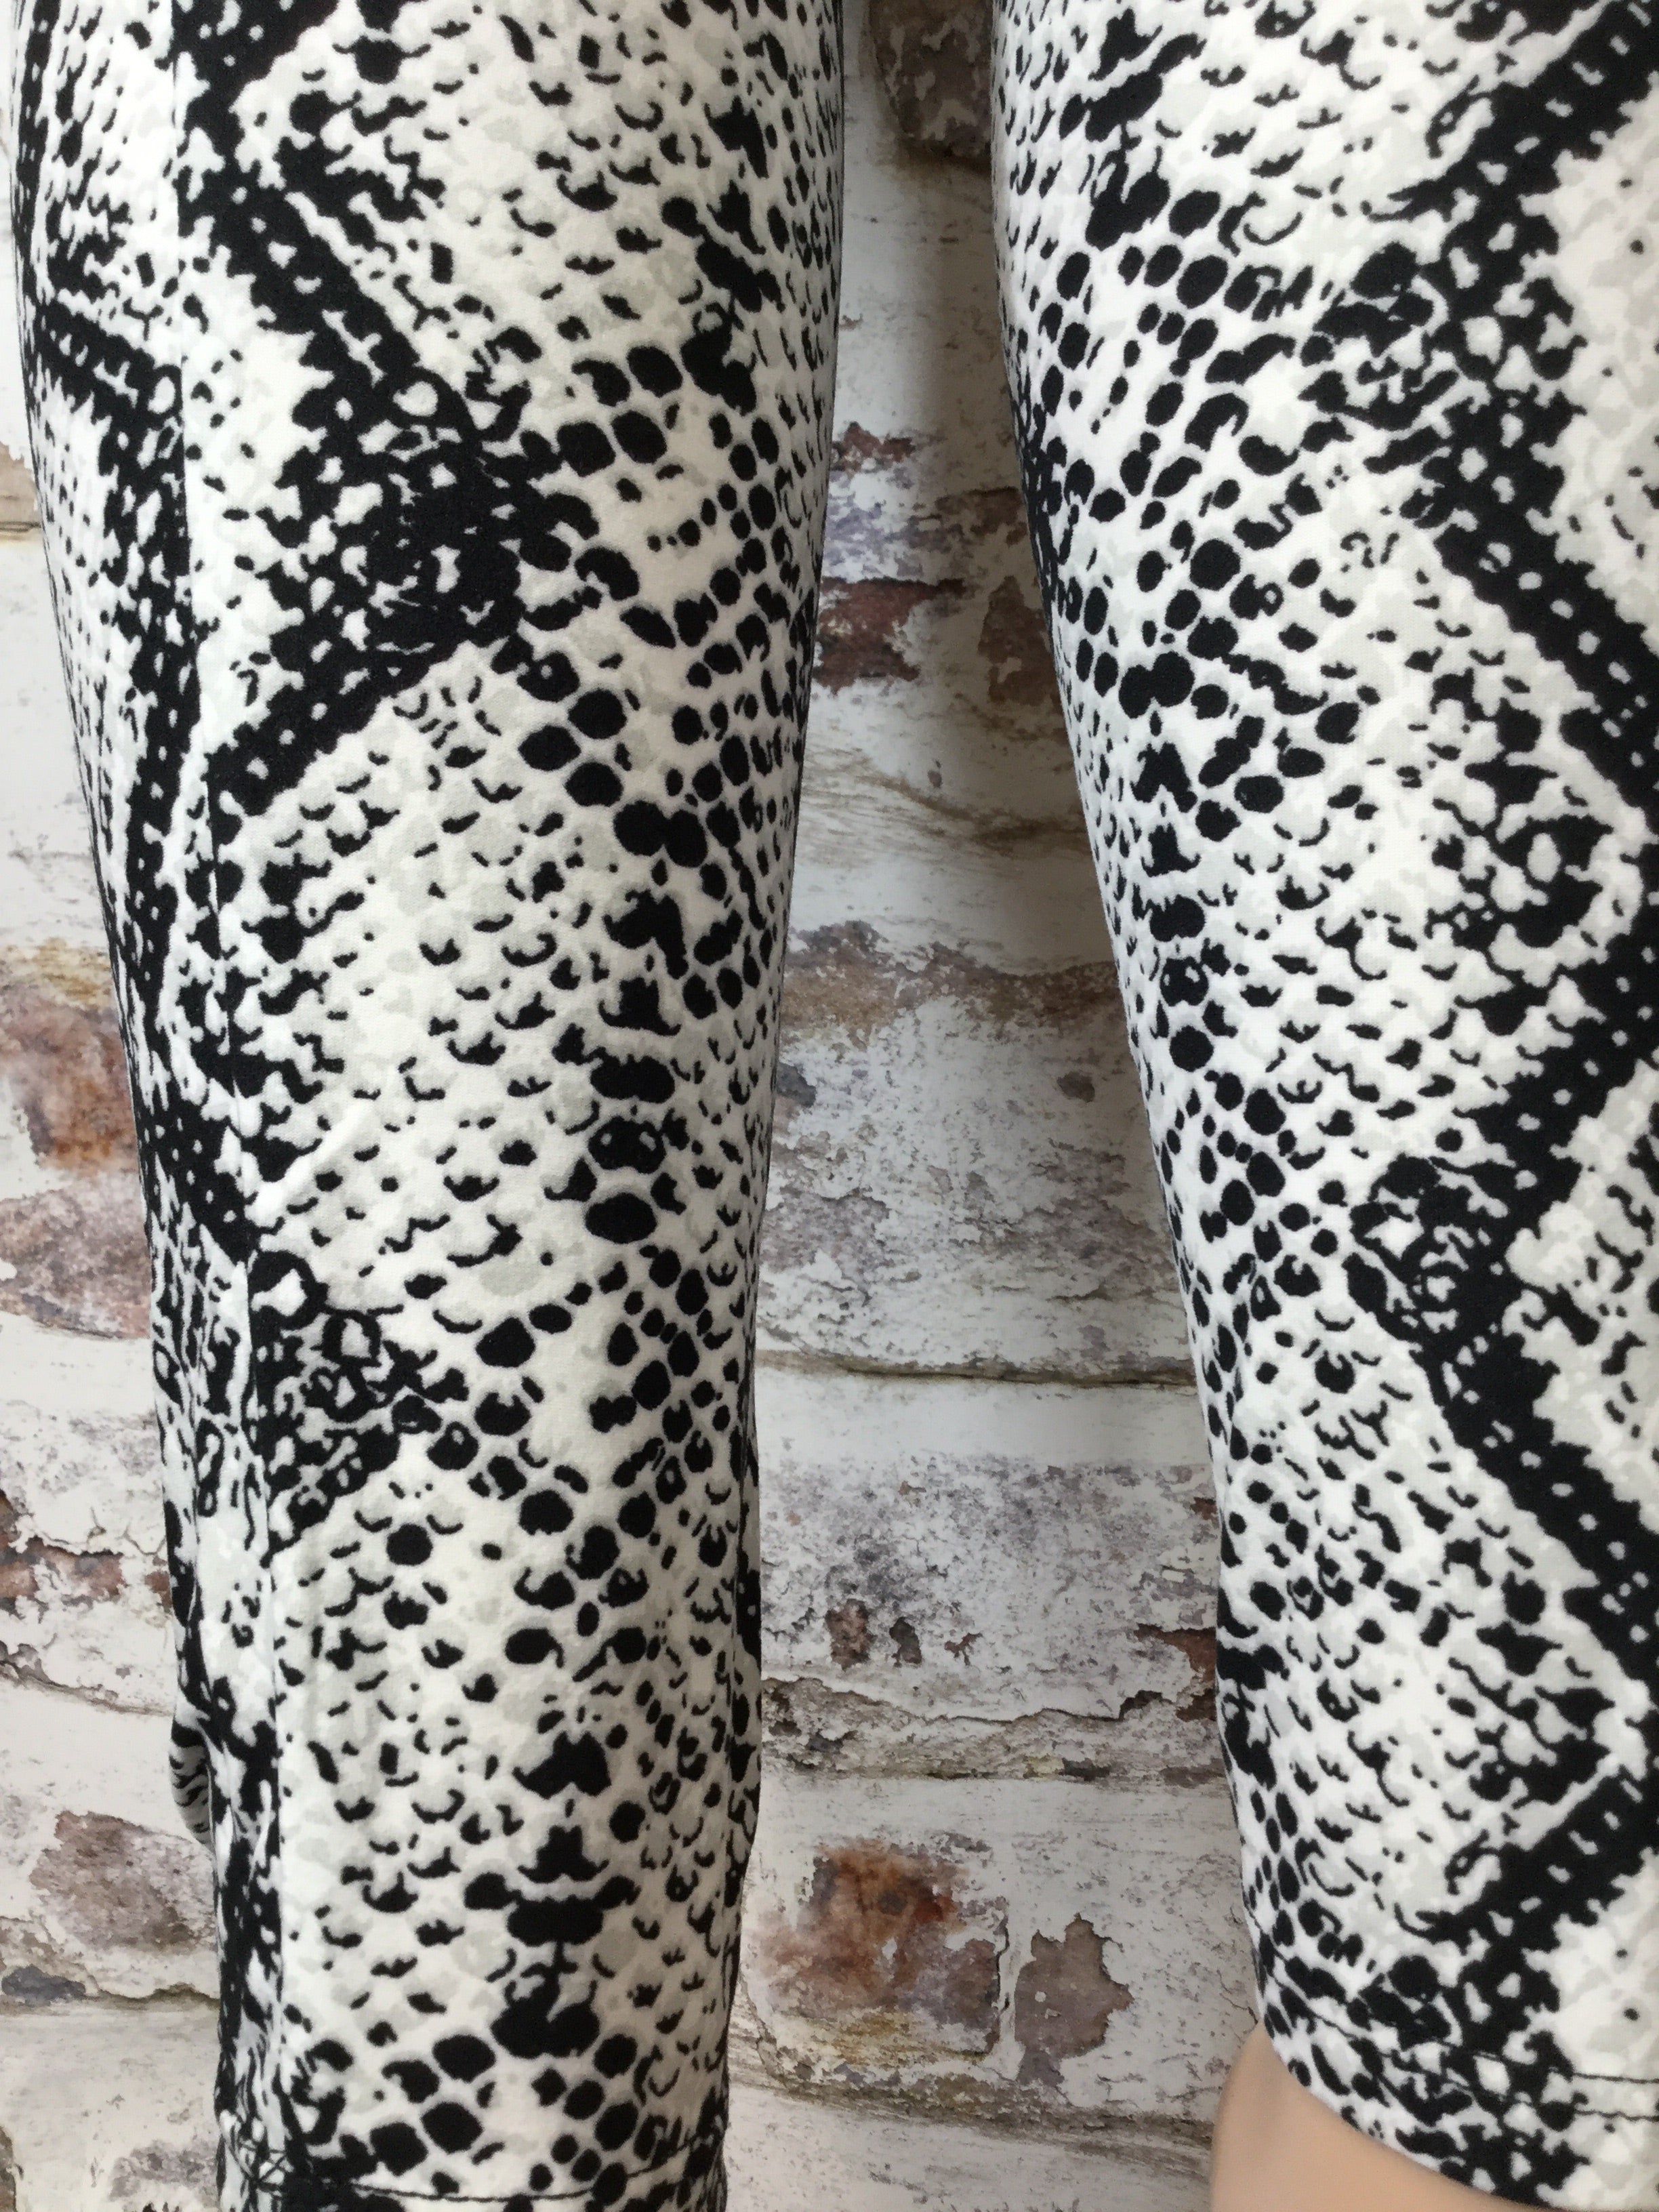 7 FOR ALL MANKIND Faux Leather Snakeskin Print Leggings In Black/ Gray Size  S | eBay